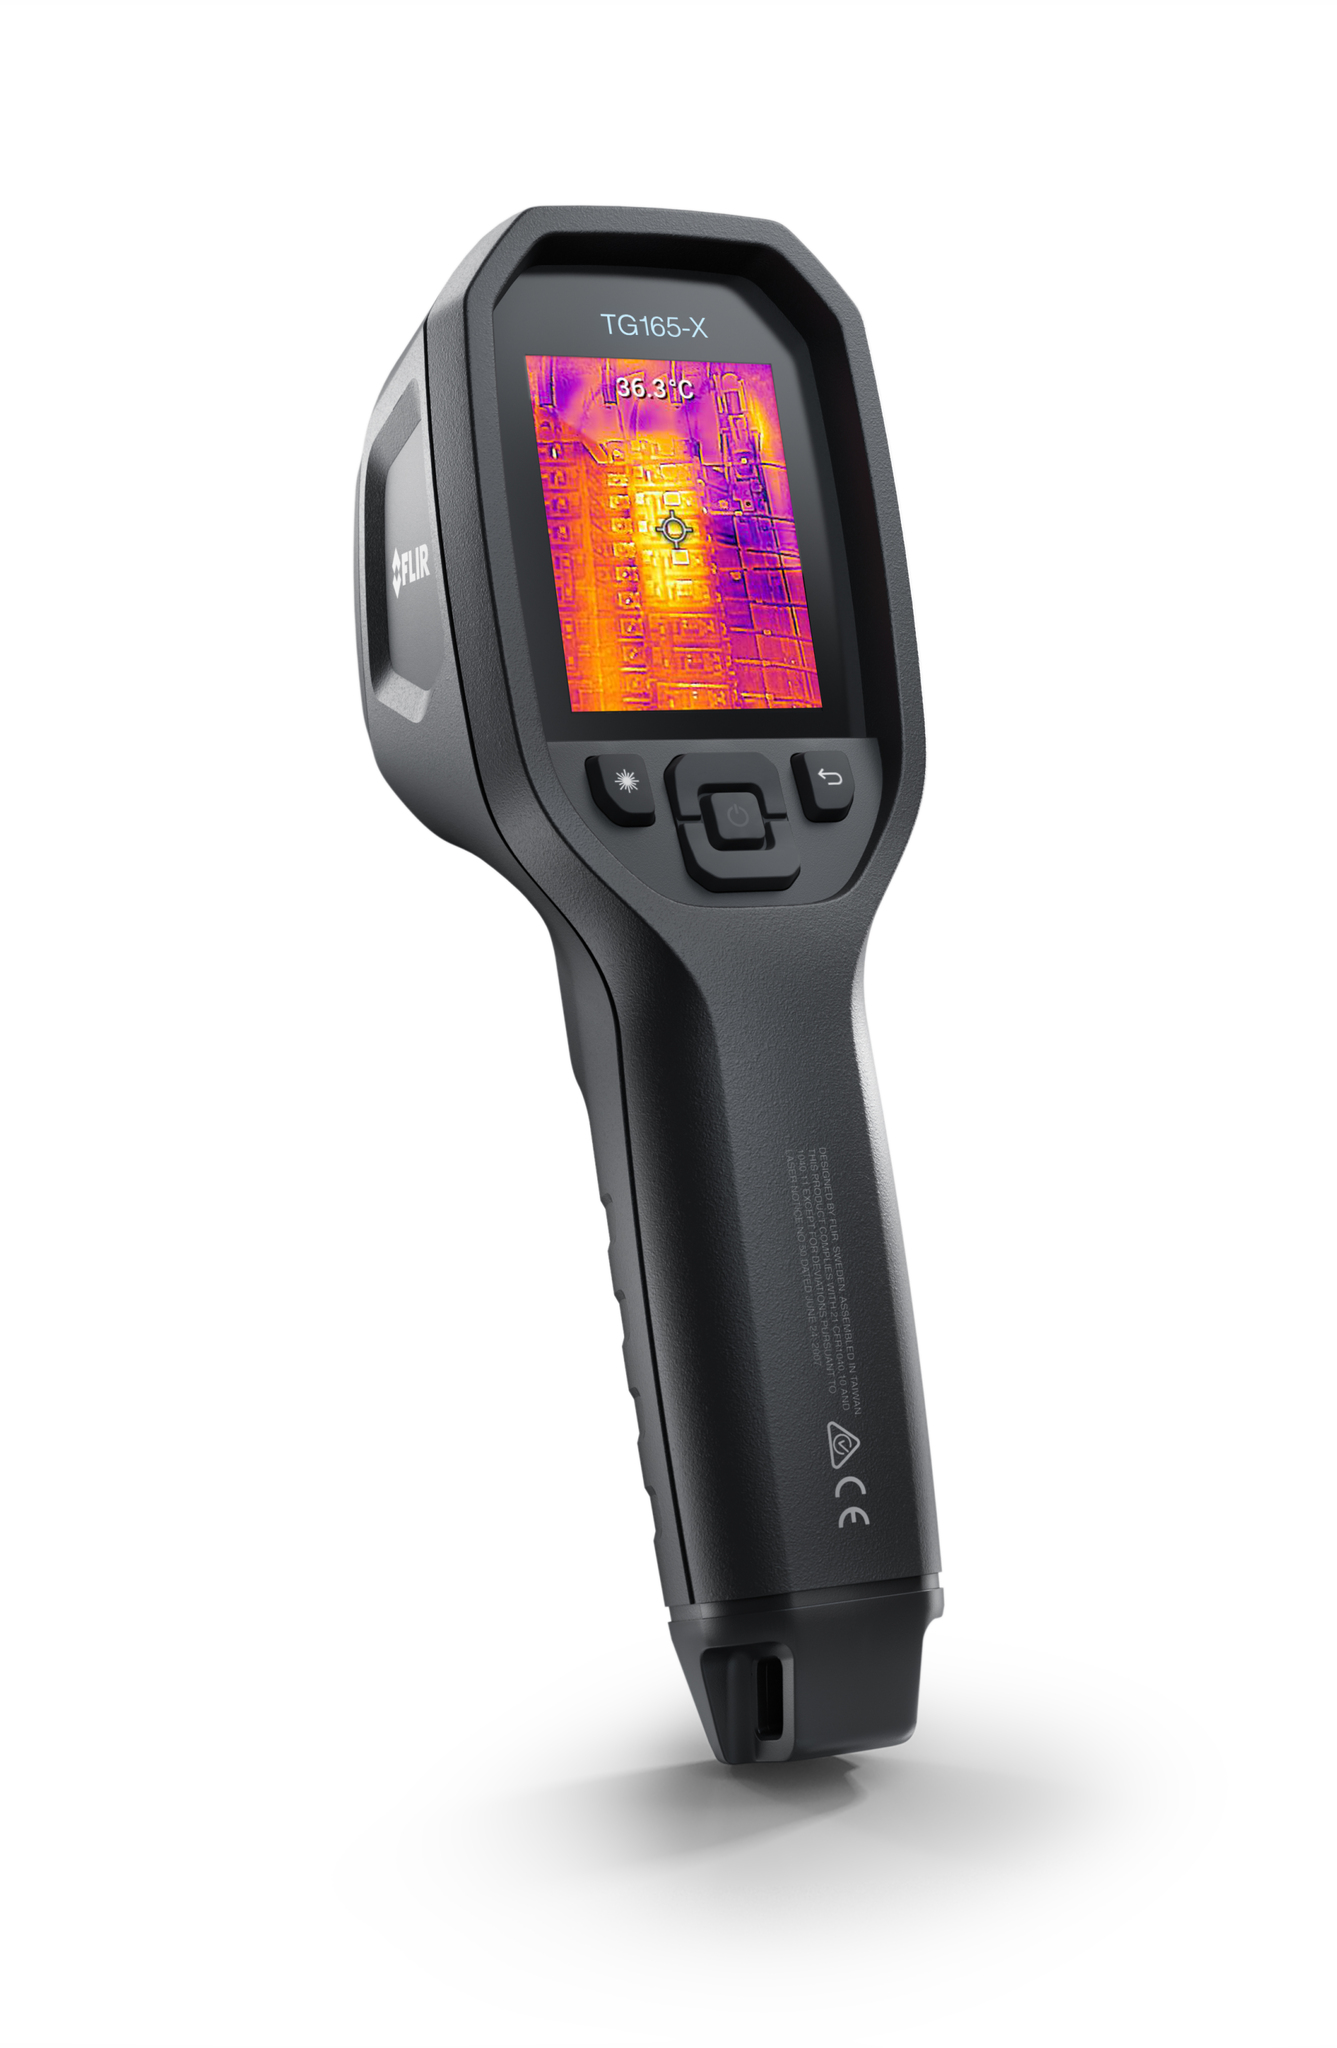 FLIR E54-EST 320x240 Resolution Thermal Camera for Elevated Skin Temperature